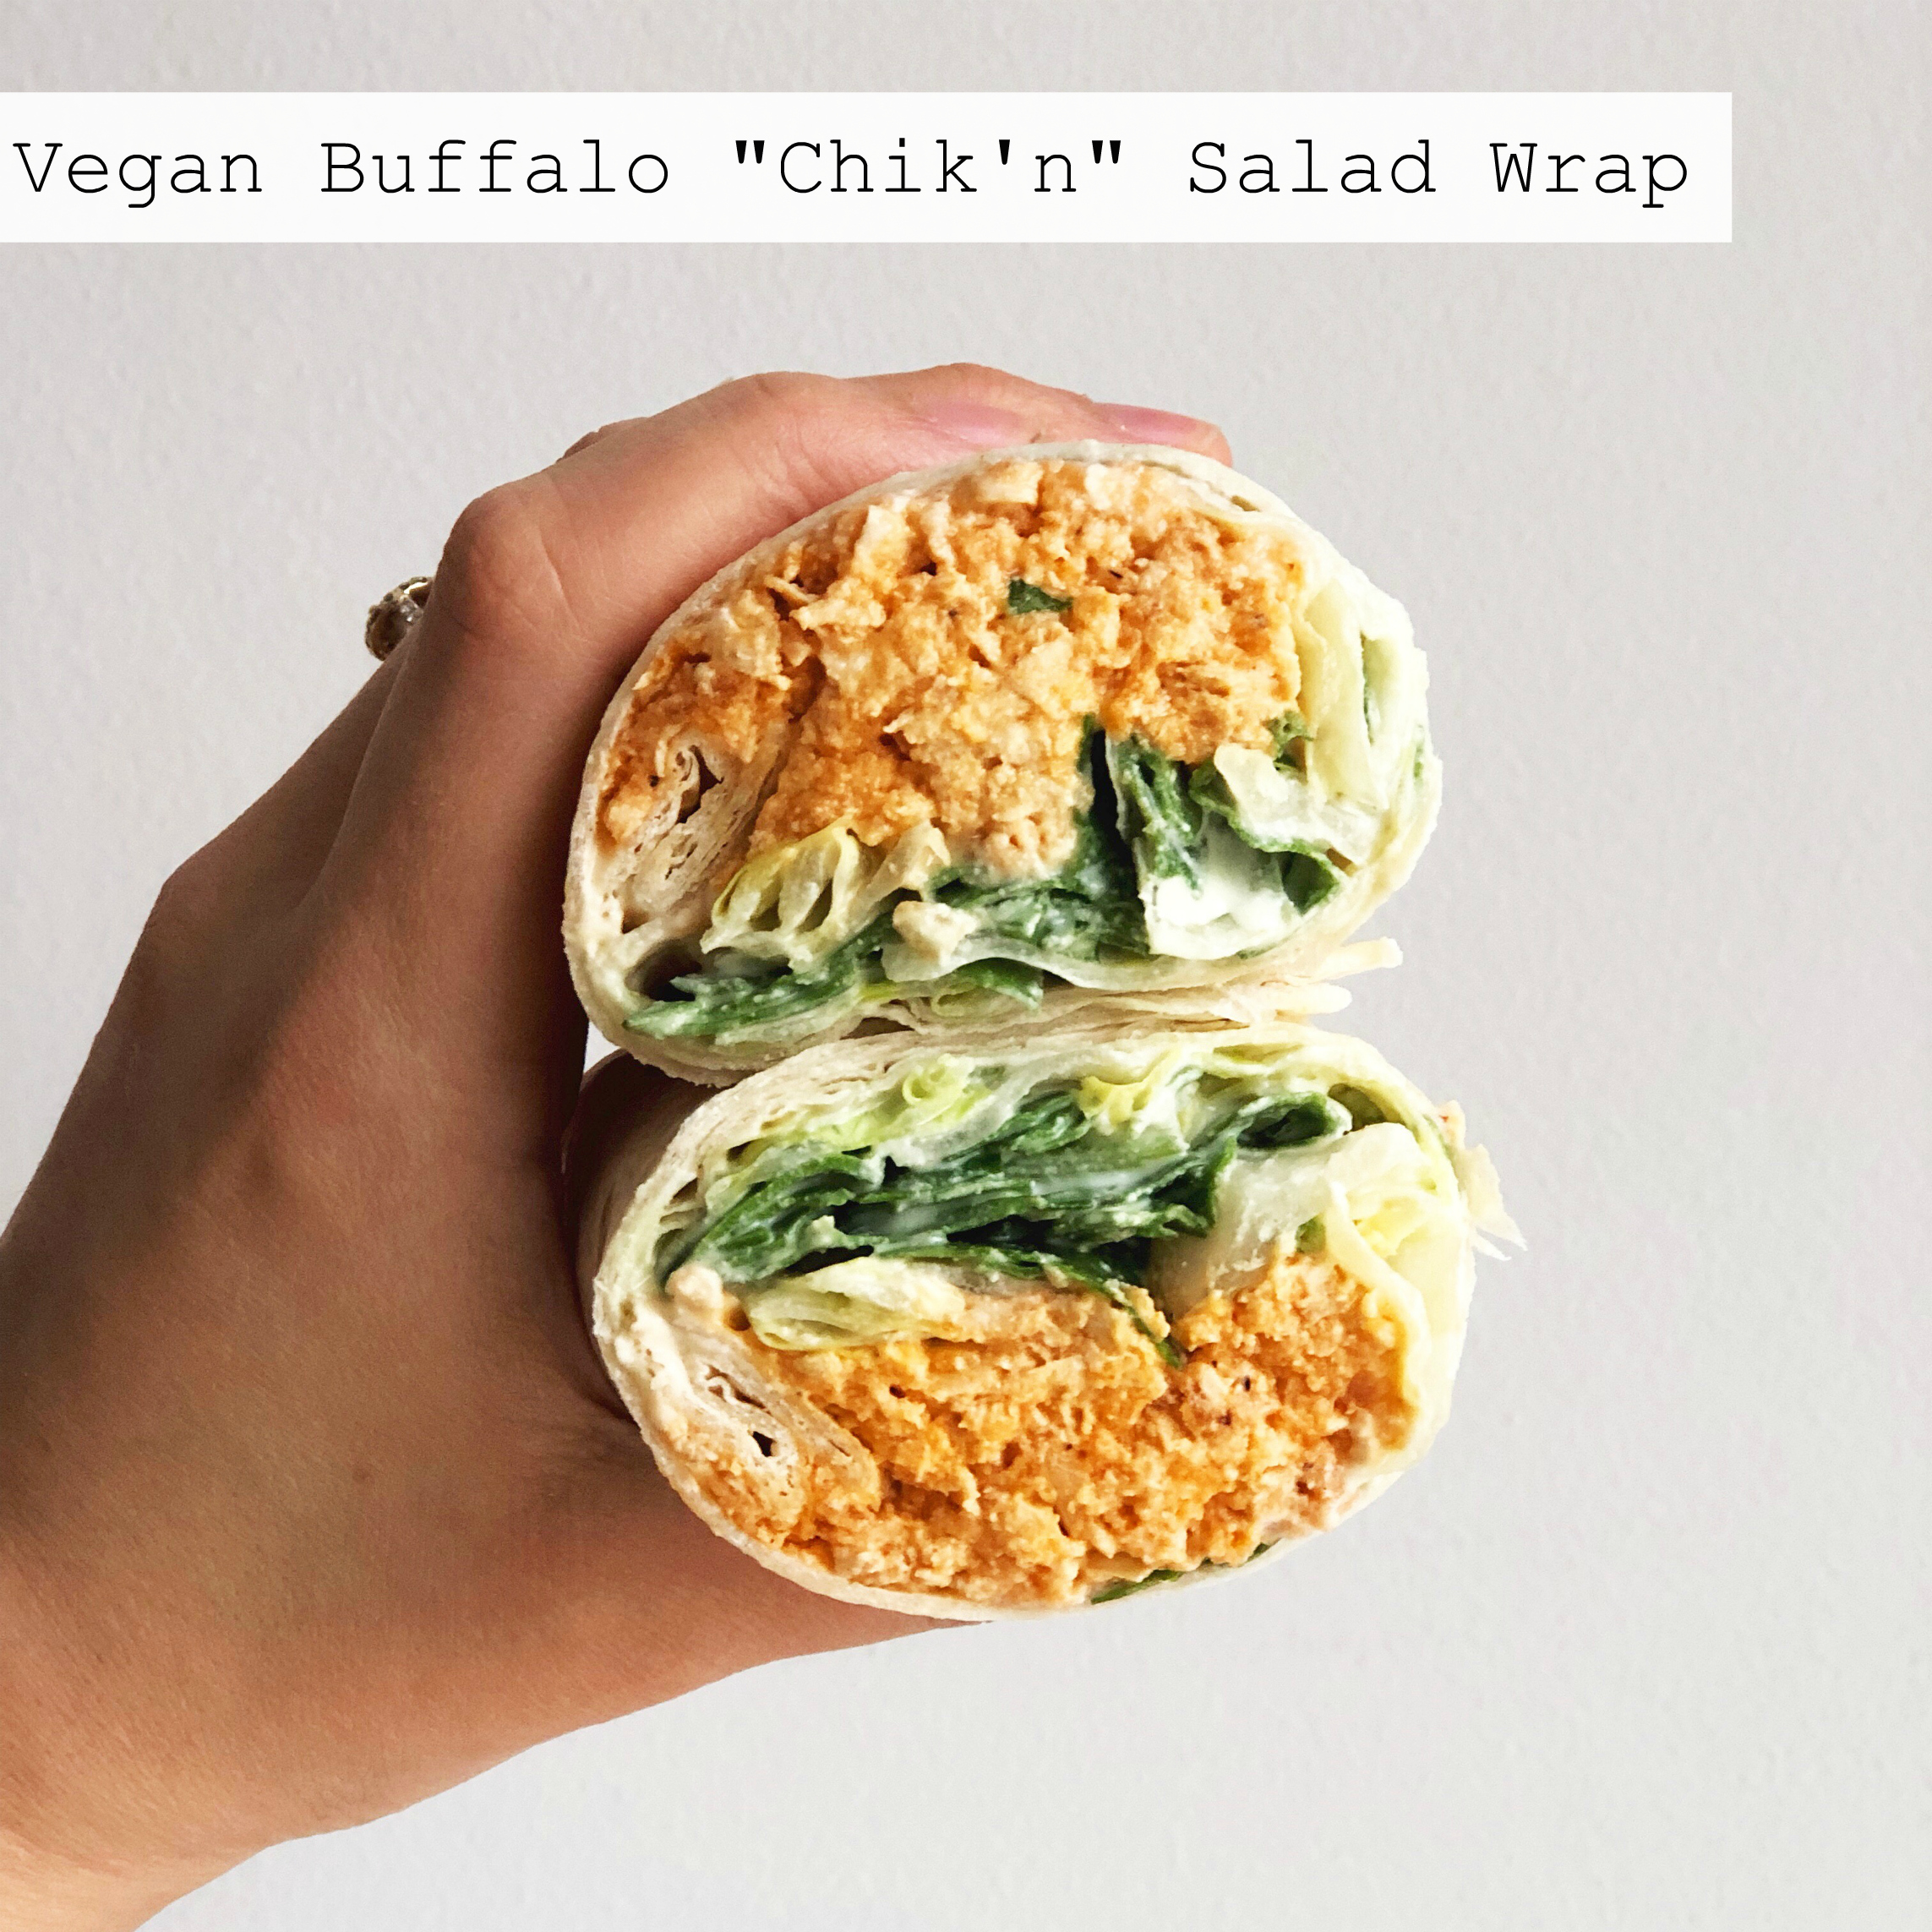 Vegan Buffalo "Chik'n" Salad Wrap